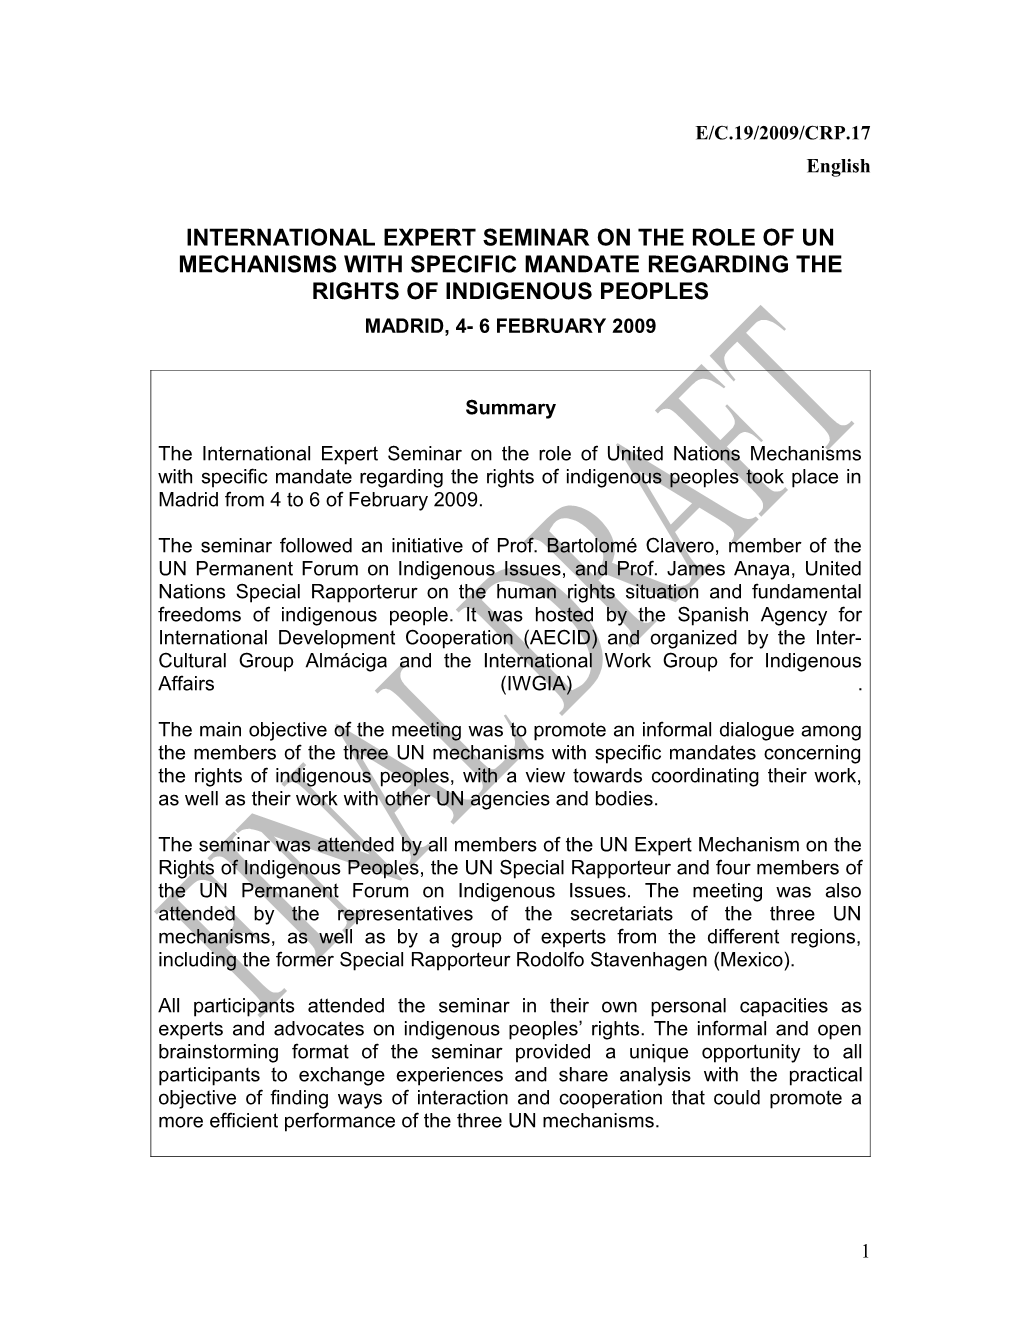 International Expert Seminar on the Role of UN Mechanisms with Specific Mandate Regarding